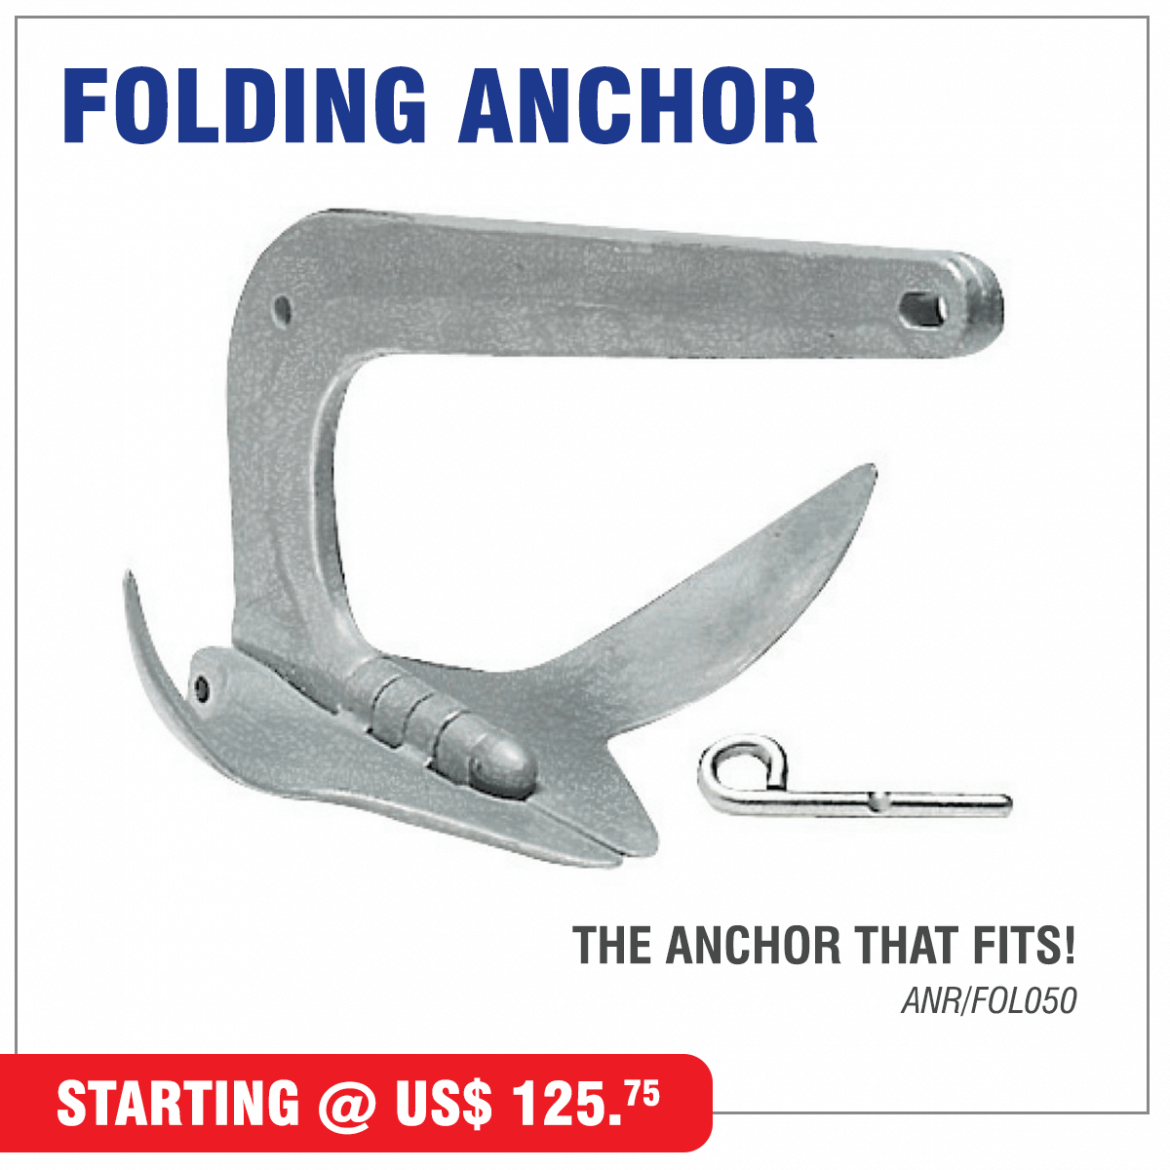 9 Folding anchors, Needles and Marine Band Separators 4